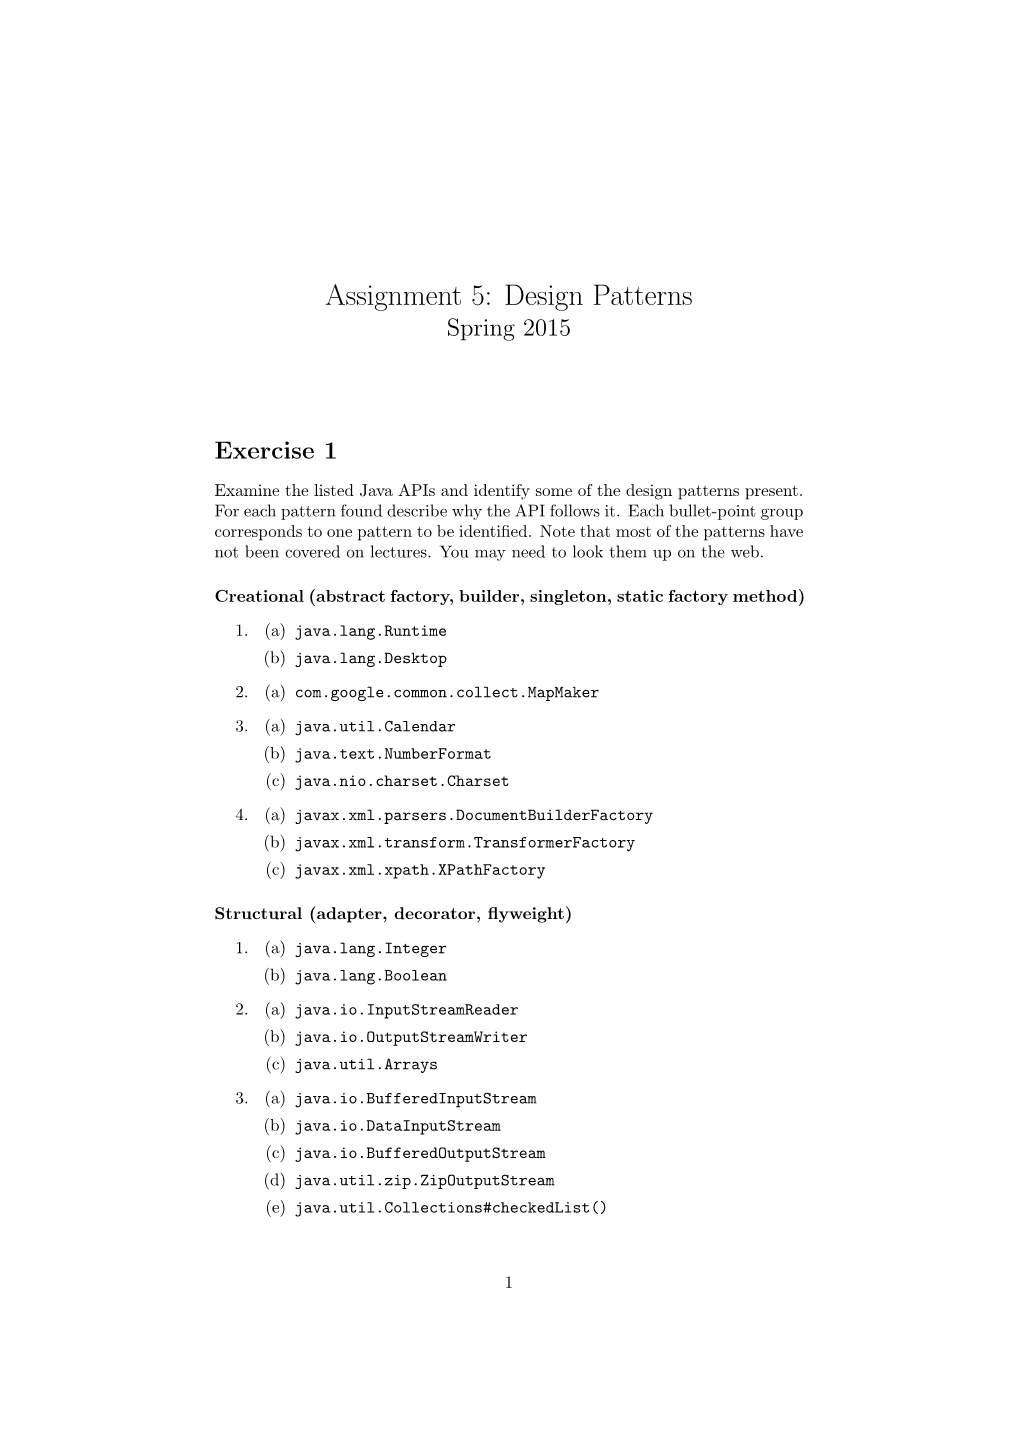 Assignment 5: Design Patterns Spring 2015